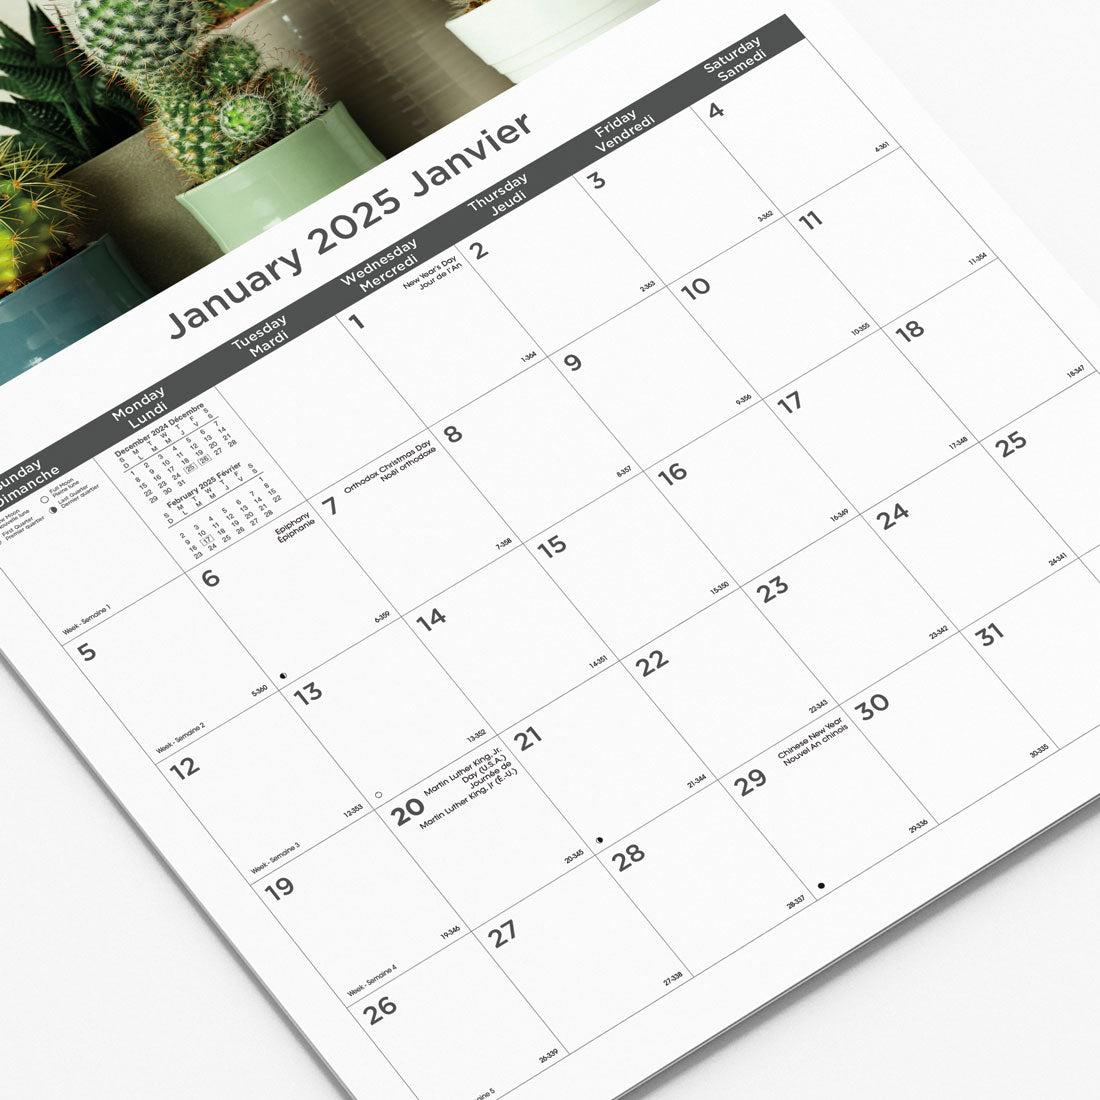 Succulent Plants Monthly Wall Calendar 2025, Bilingual, C173121B